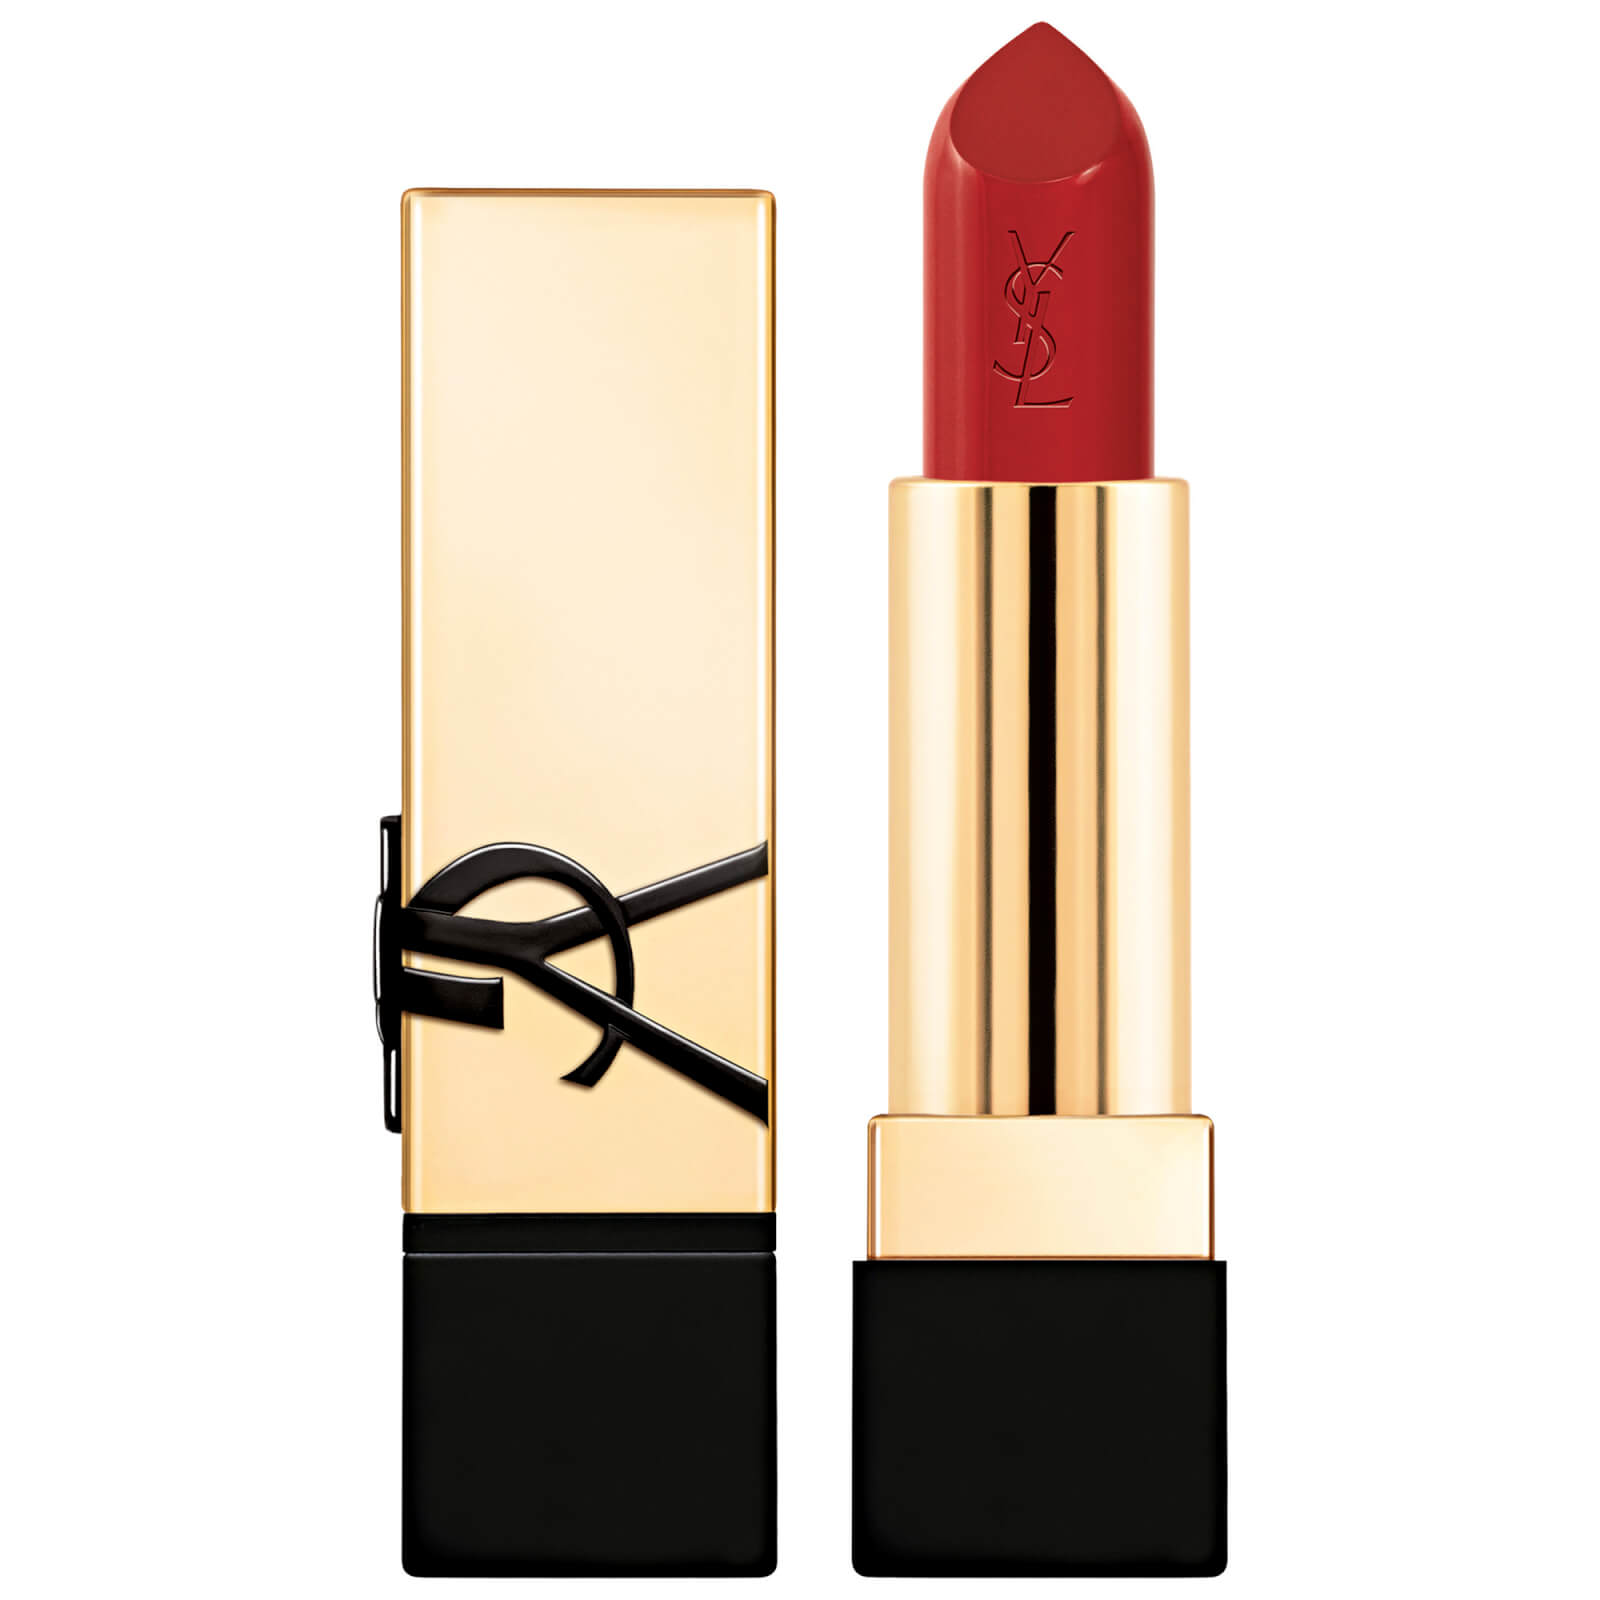 Yves Saint Laurent Rouge Pur Couture Renovation Lipstick 3g (Various Shades) - R1971